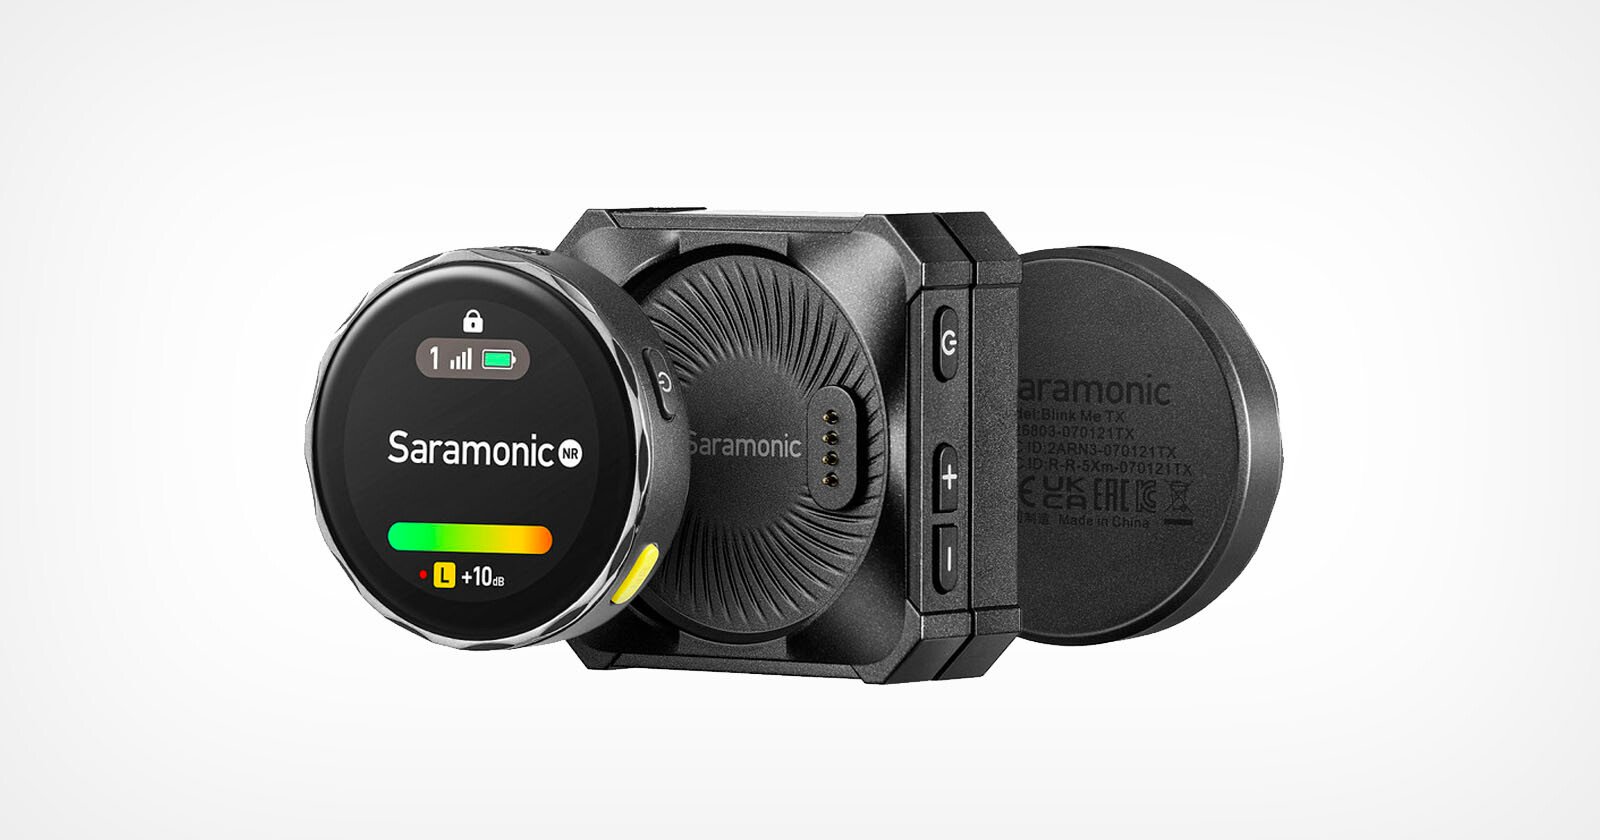  saramonic blinkme wireless mics are controlled touchscreens 